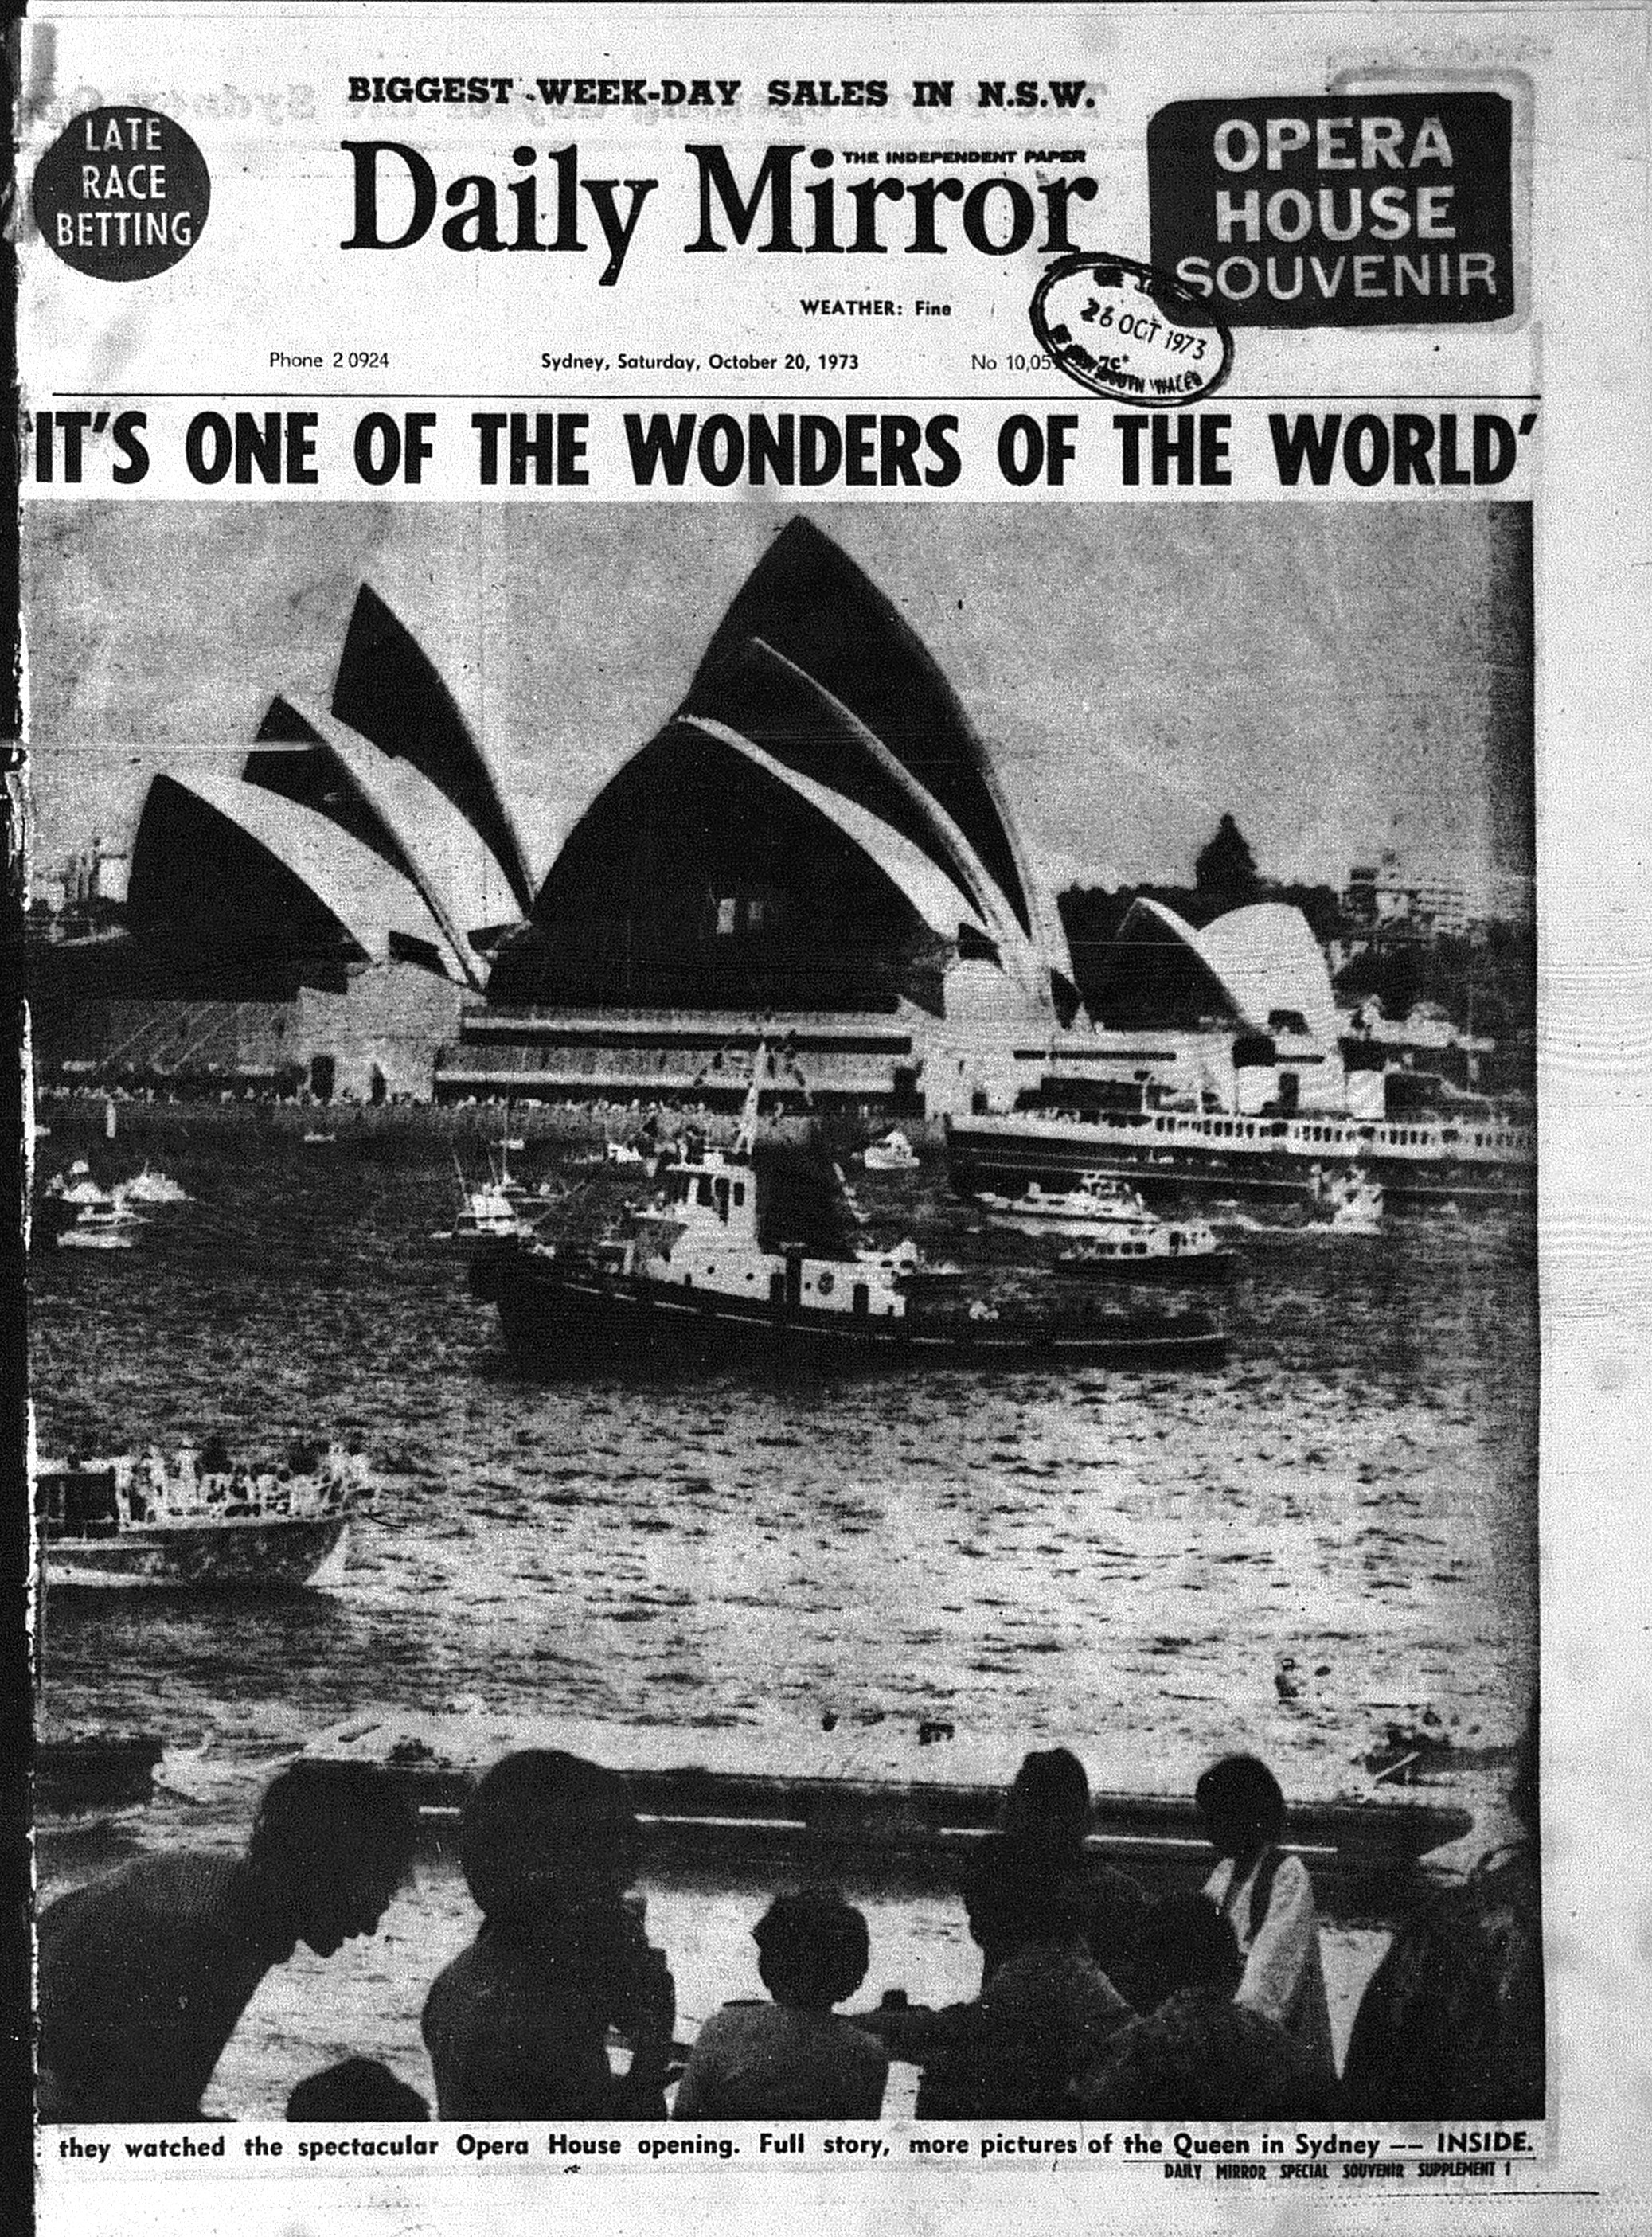 Sydney Opera House Opens October 20 1973 daily mirror (1)